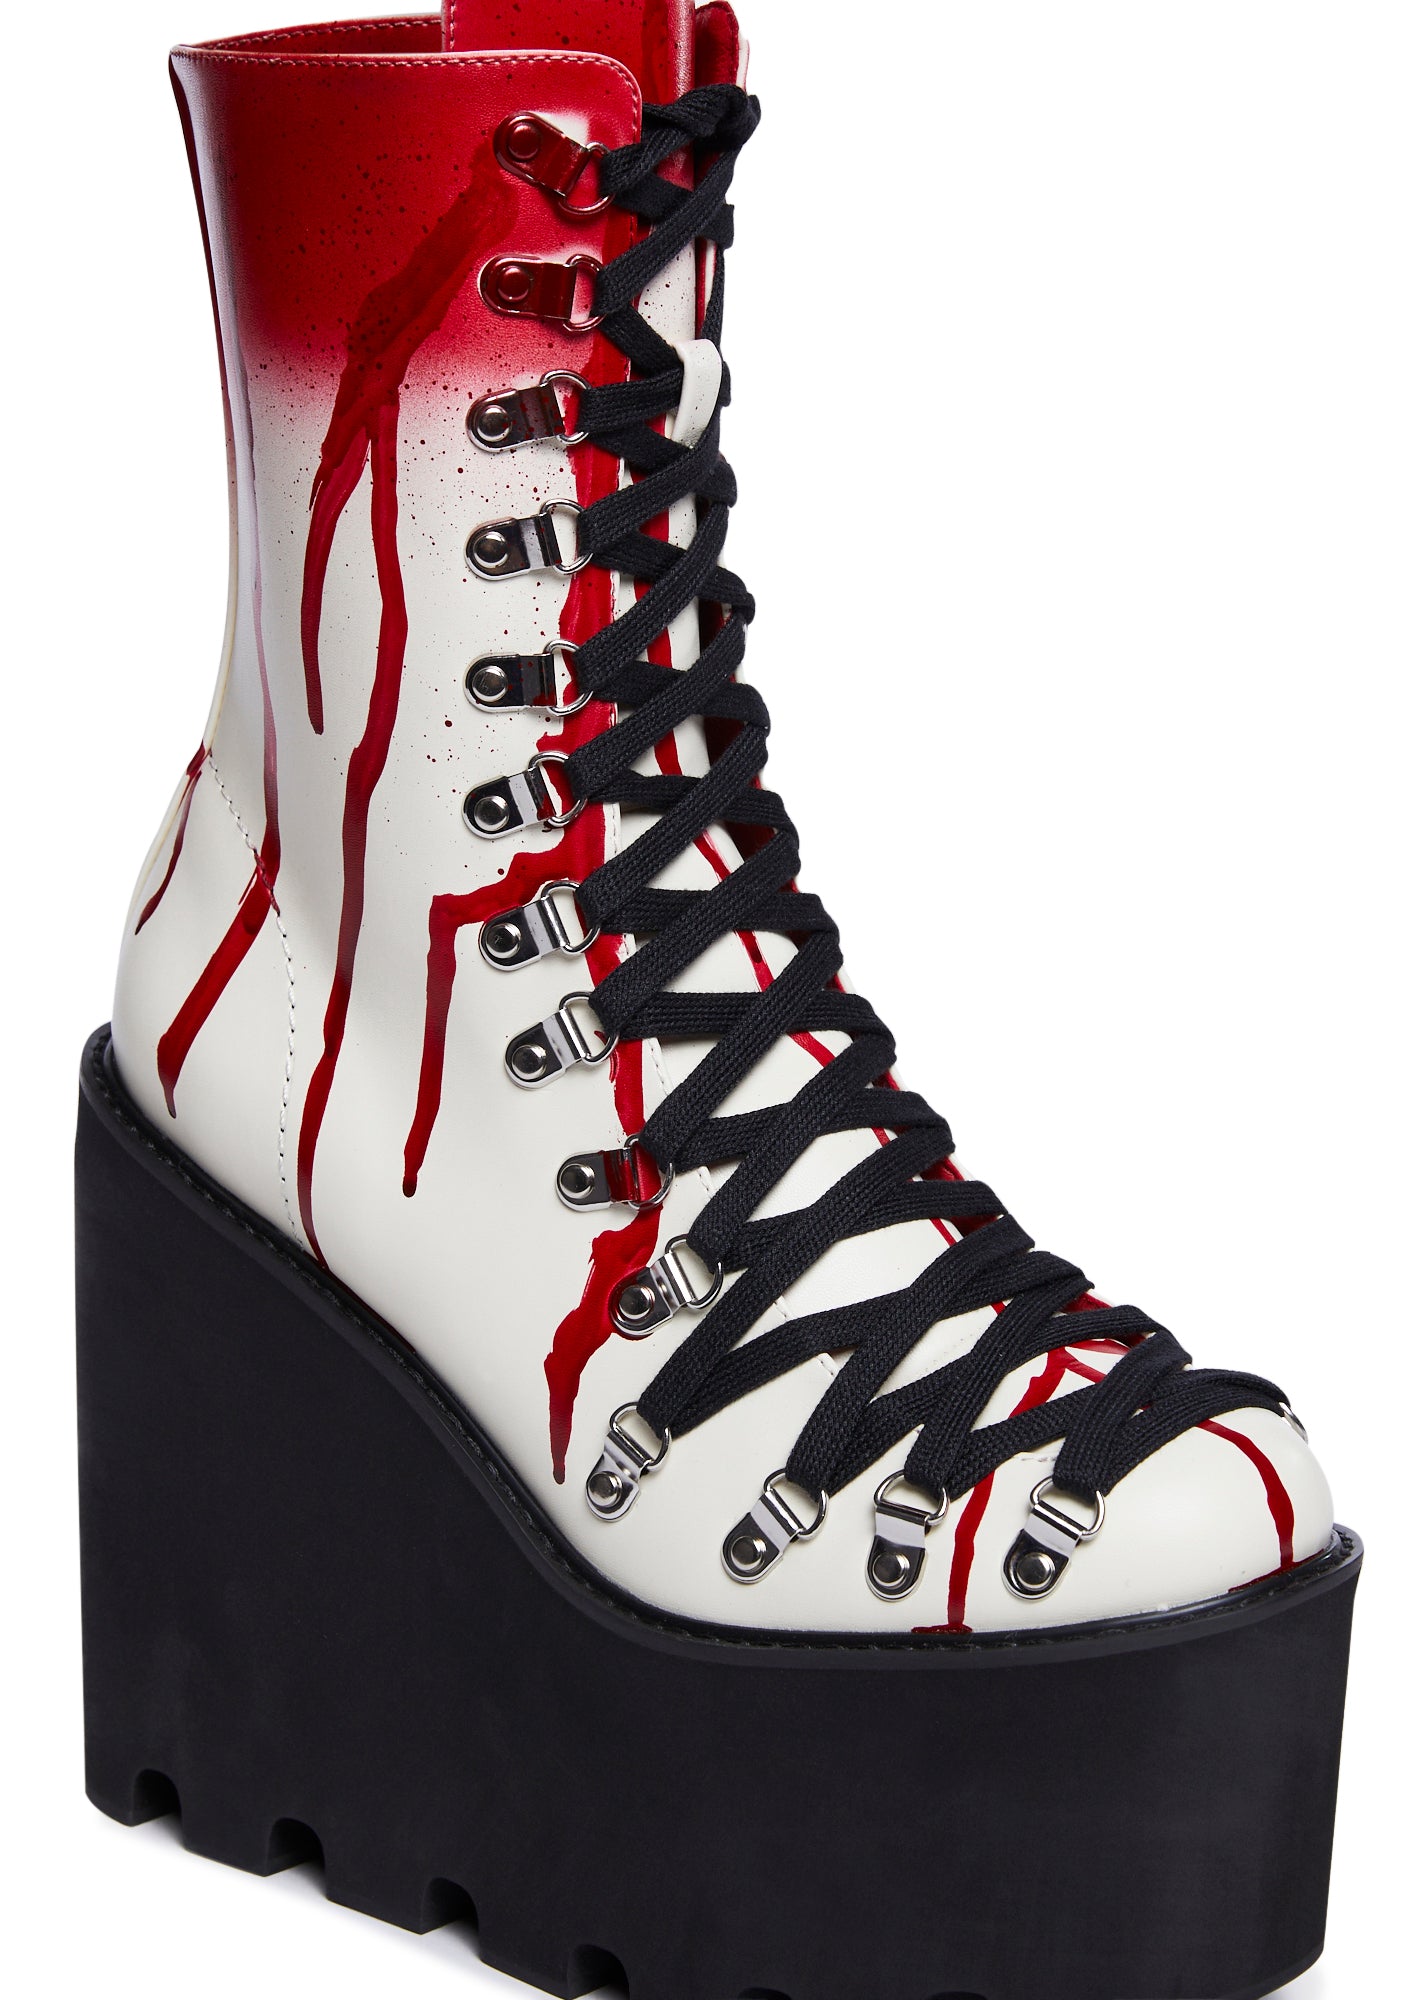 Blood-Dripping Booties : Kamaeleon Shoe collection